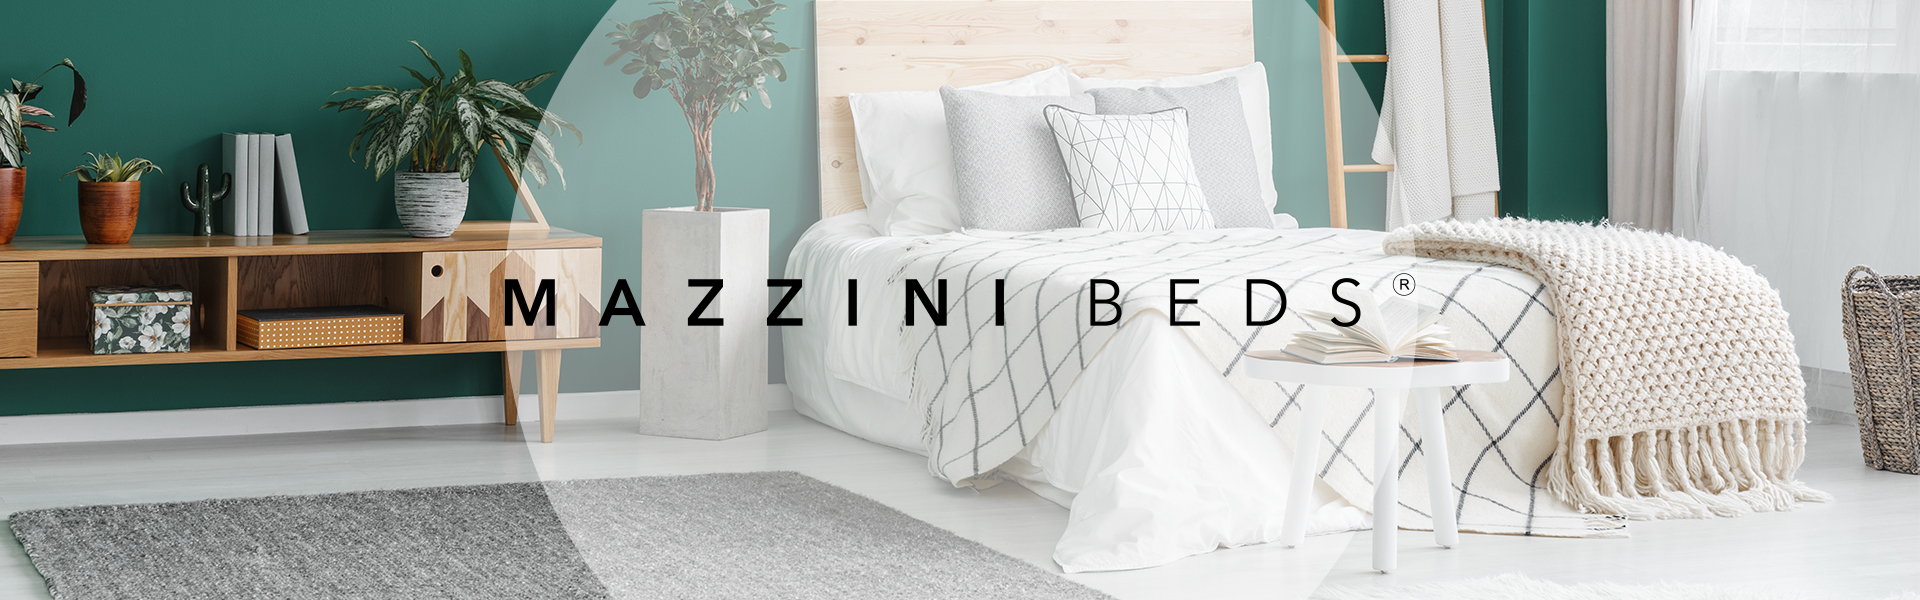 Sänky Mazzini Beds Nerin 160x200cm, vaaleanharmaa. 